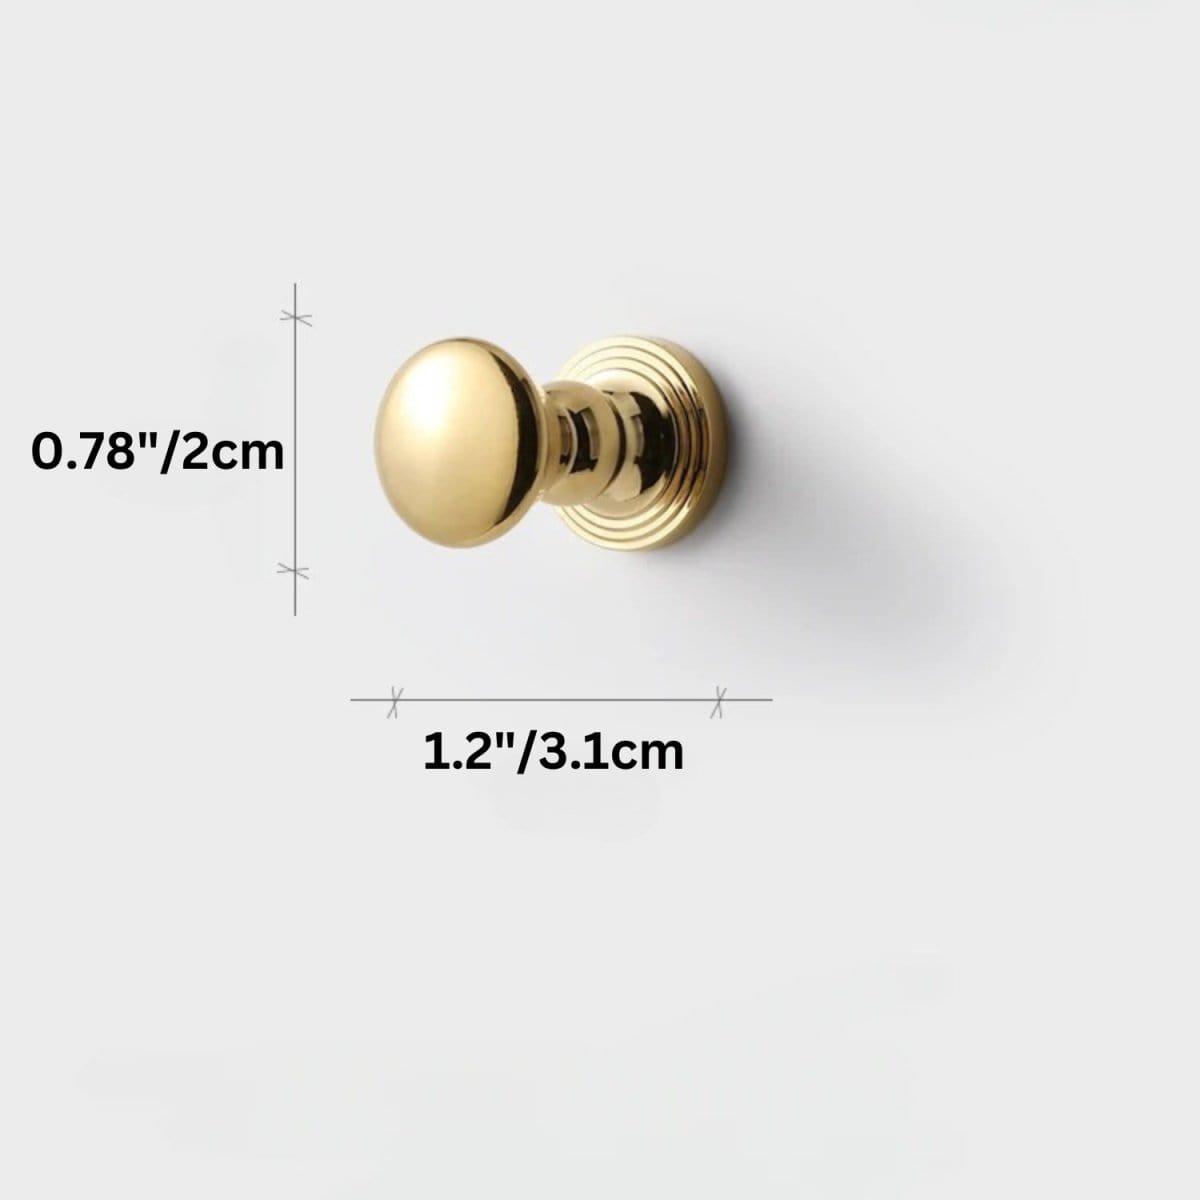 Residence Supply Knob: 0.78" x 1.2" / 2 x 3.1cm / Golden Arciv Knob & Pull Bar